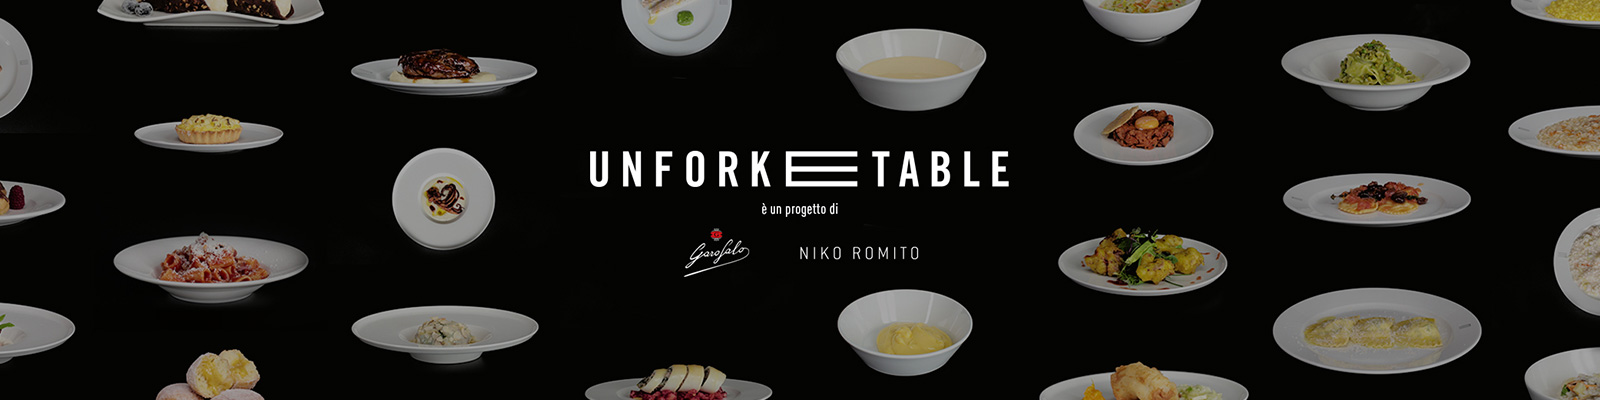 Pasta Garofalo introduit Unforketable sur Youtube